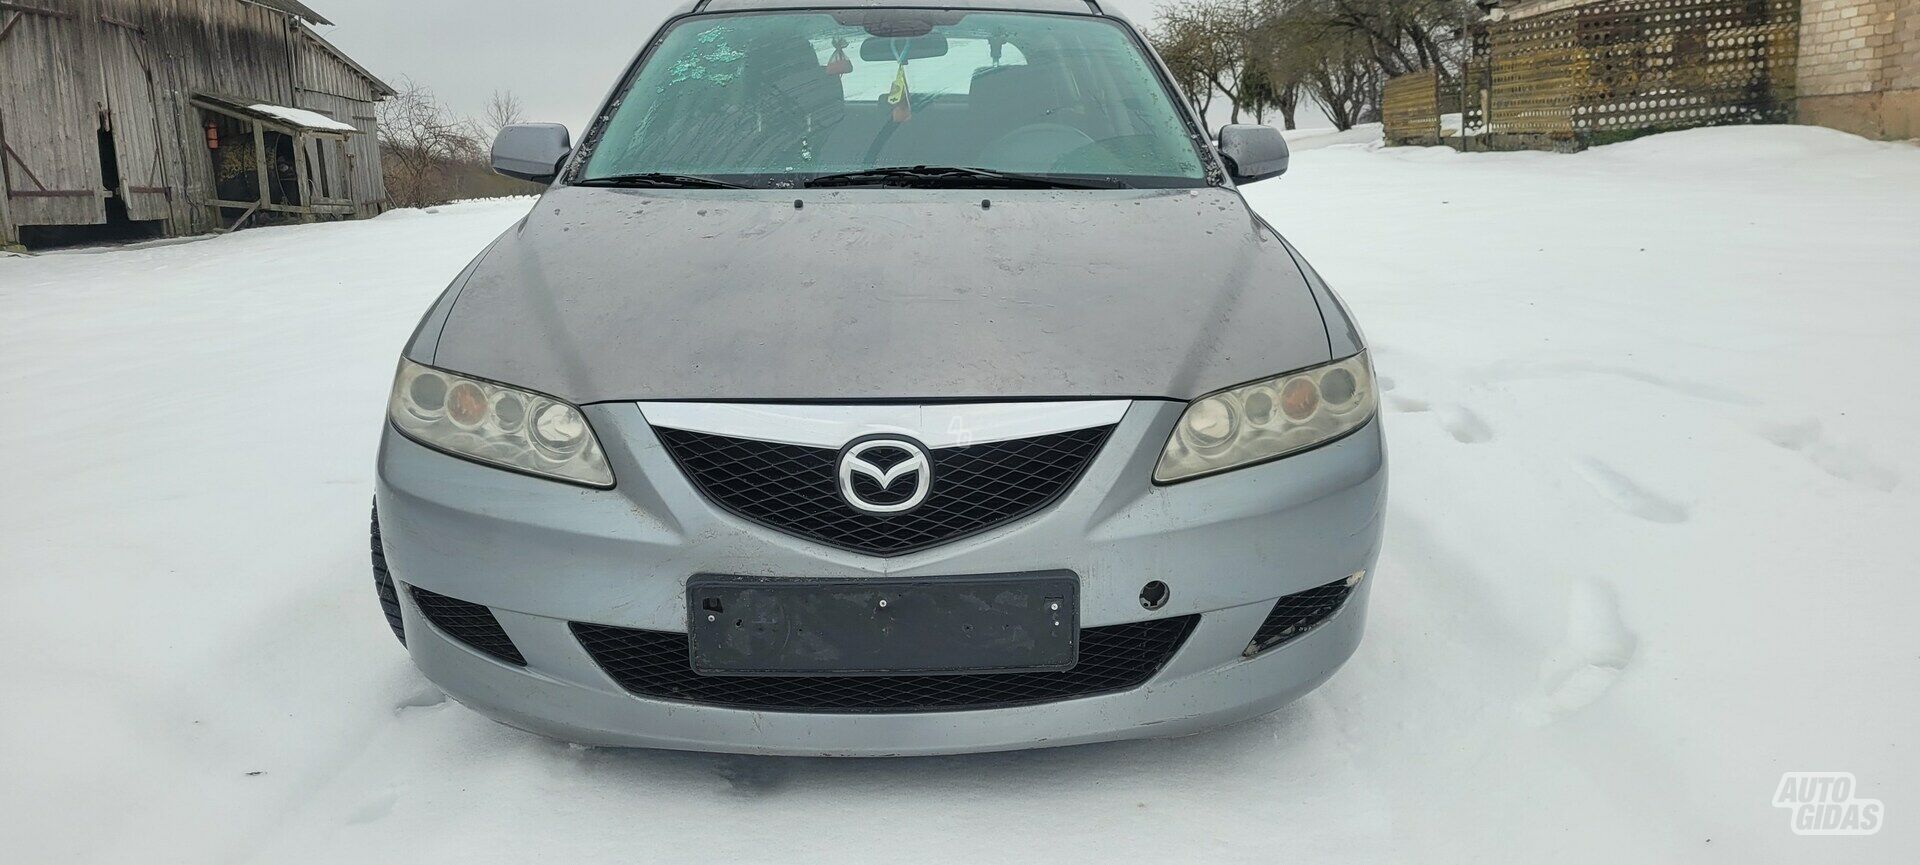 Mazda 6 I 2004 m dalys